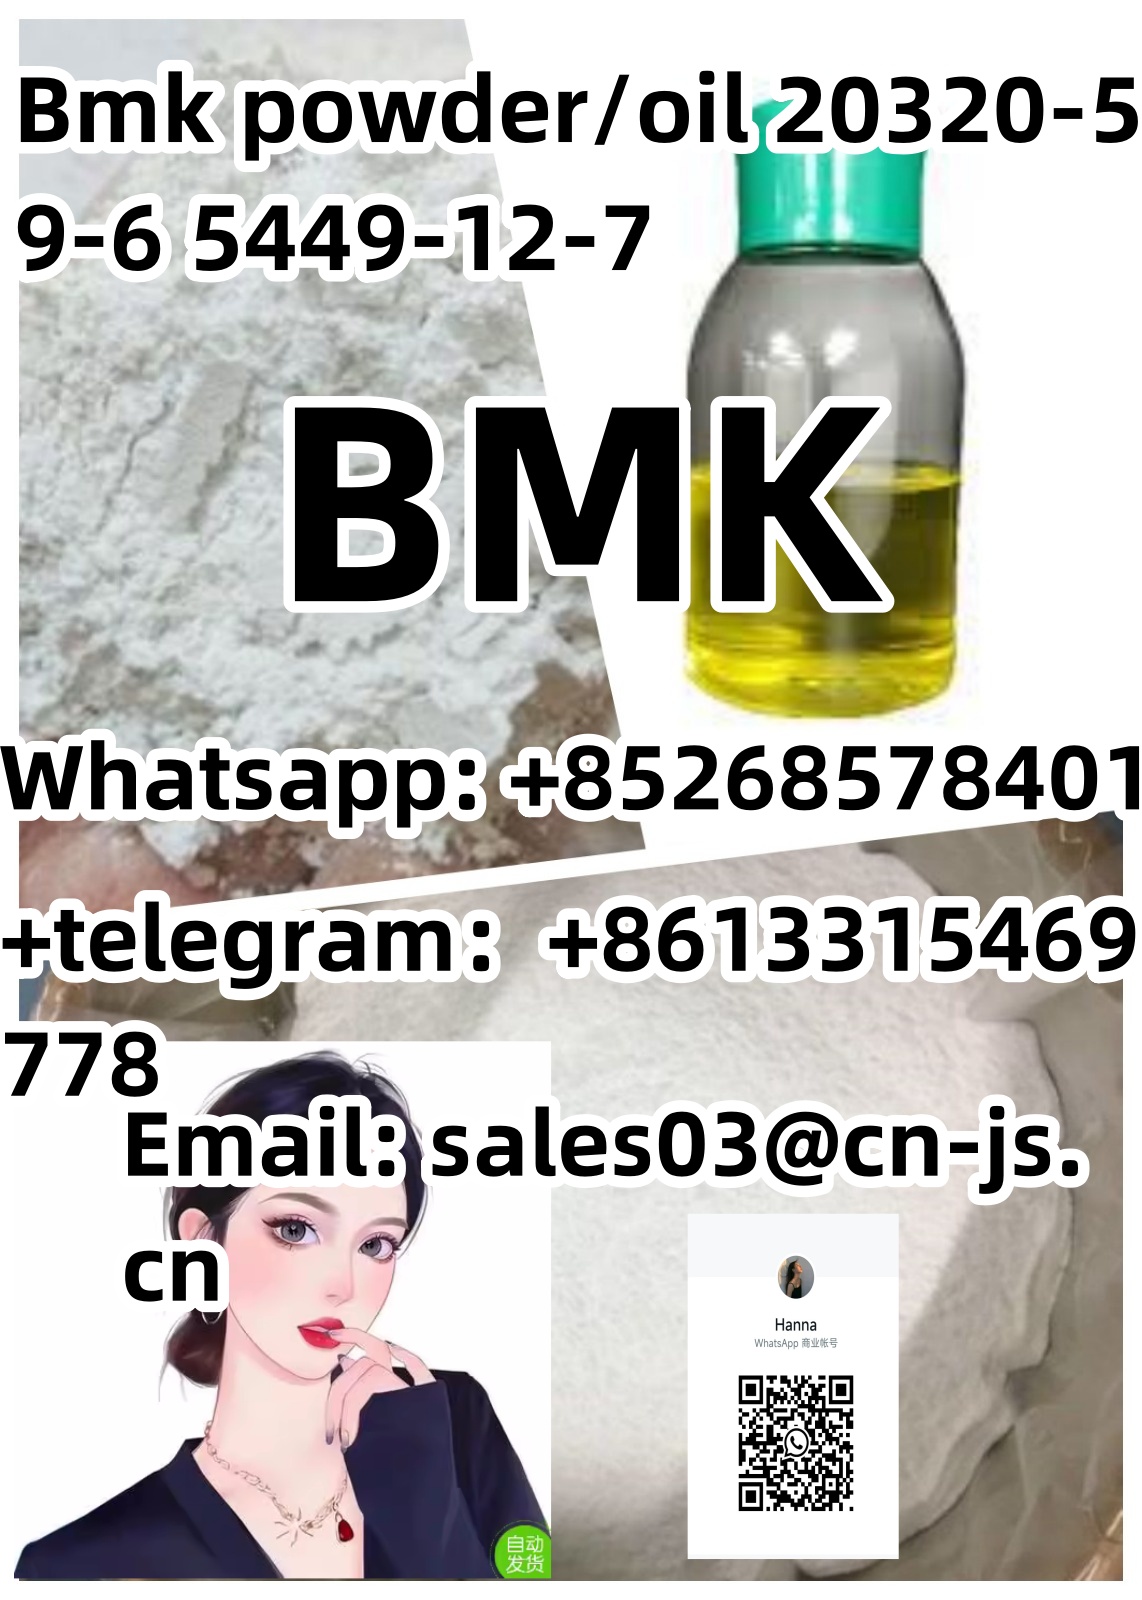 Cheap Bmk powder/oil 20320-59-6 5449-12-7,1,Pets,Free Classifieds,Post Free Ads,77traders.com